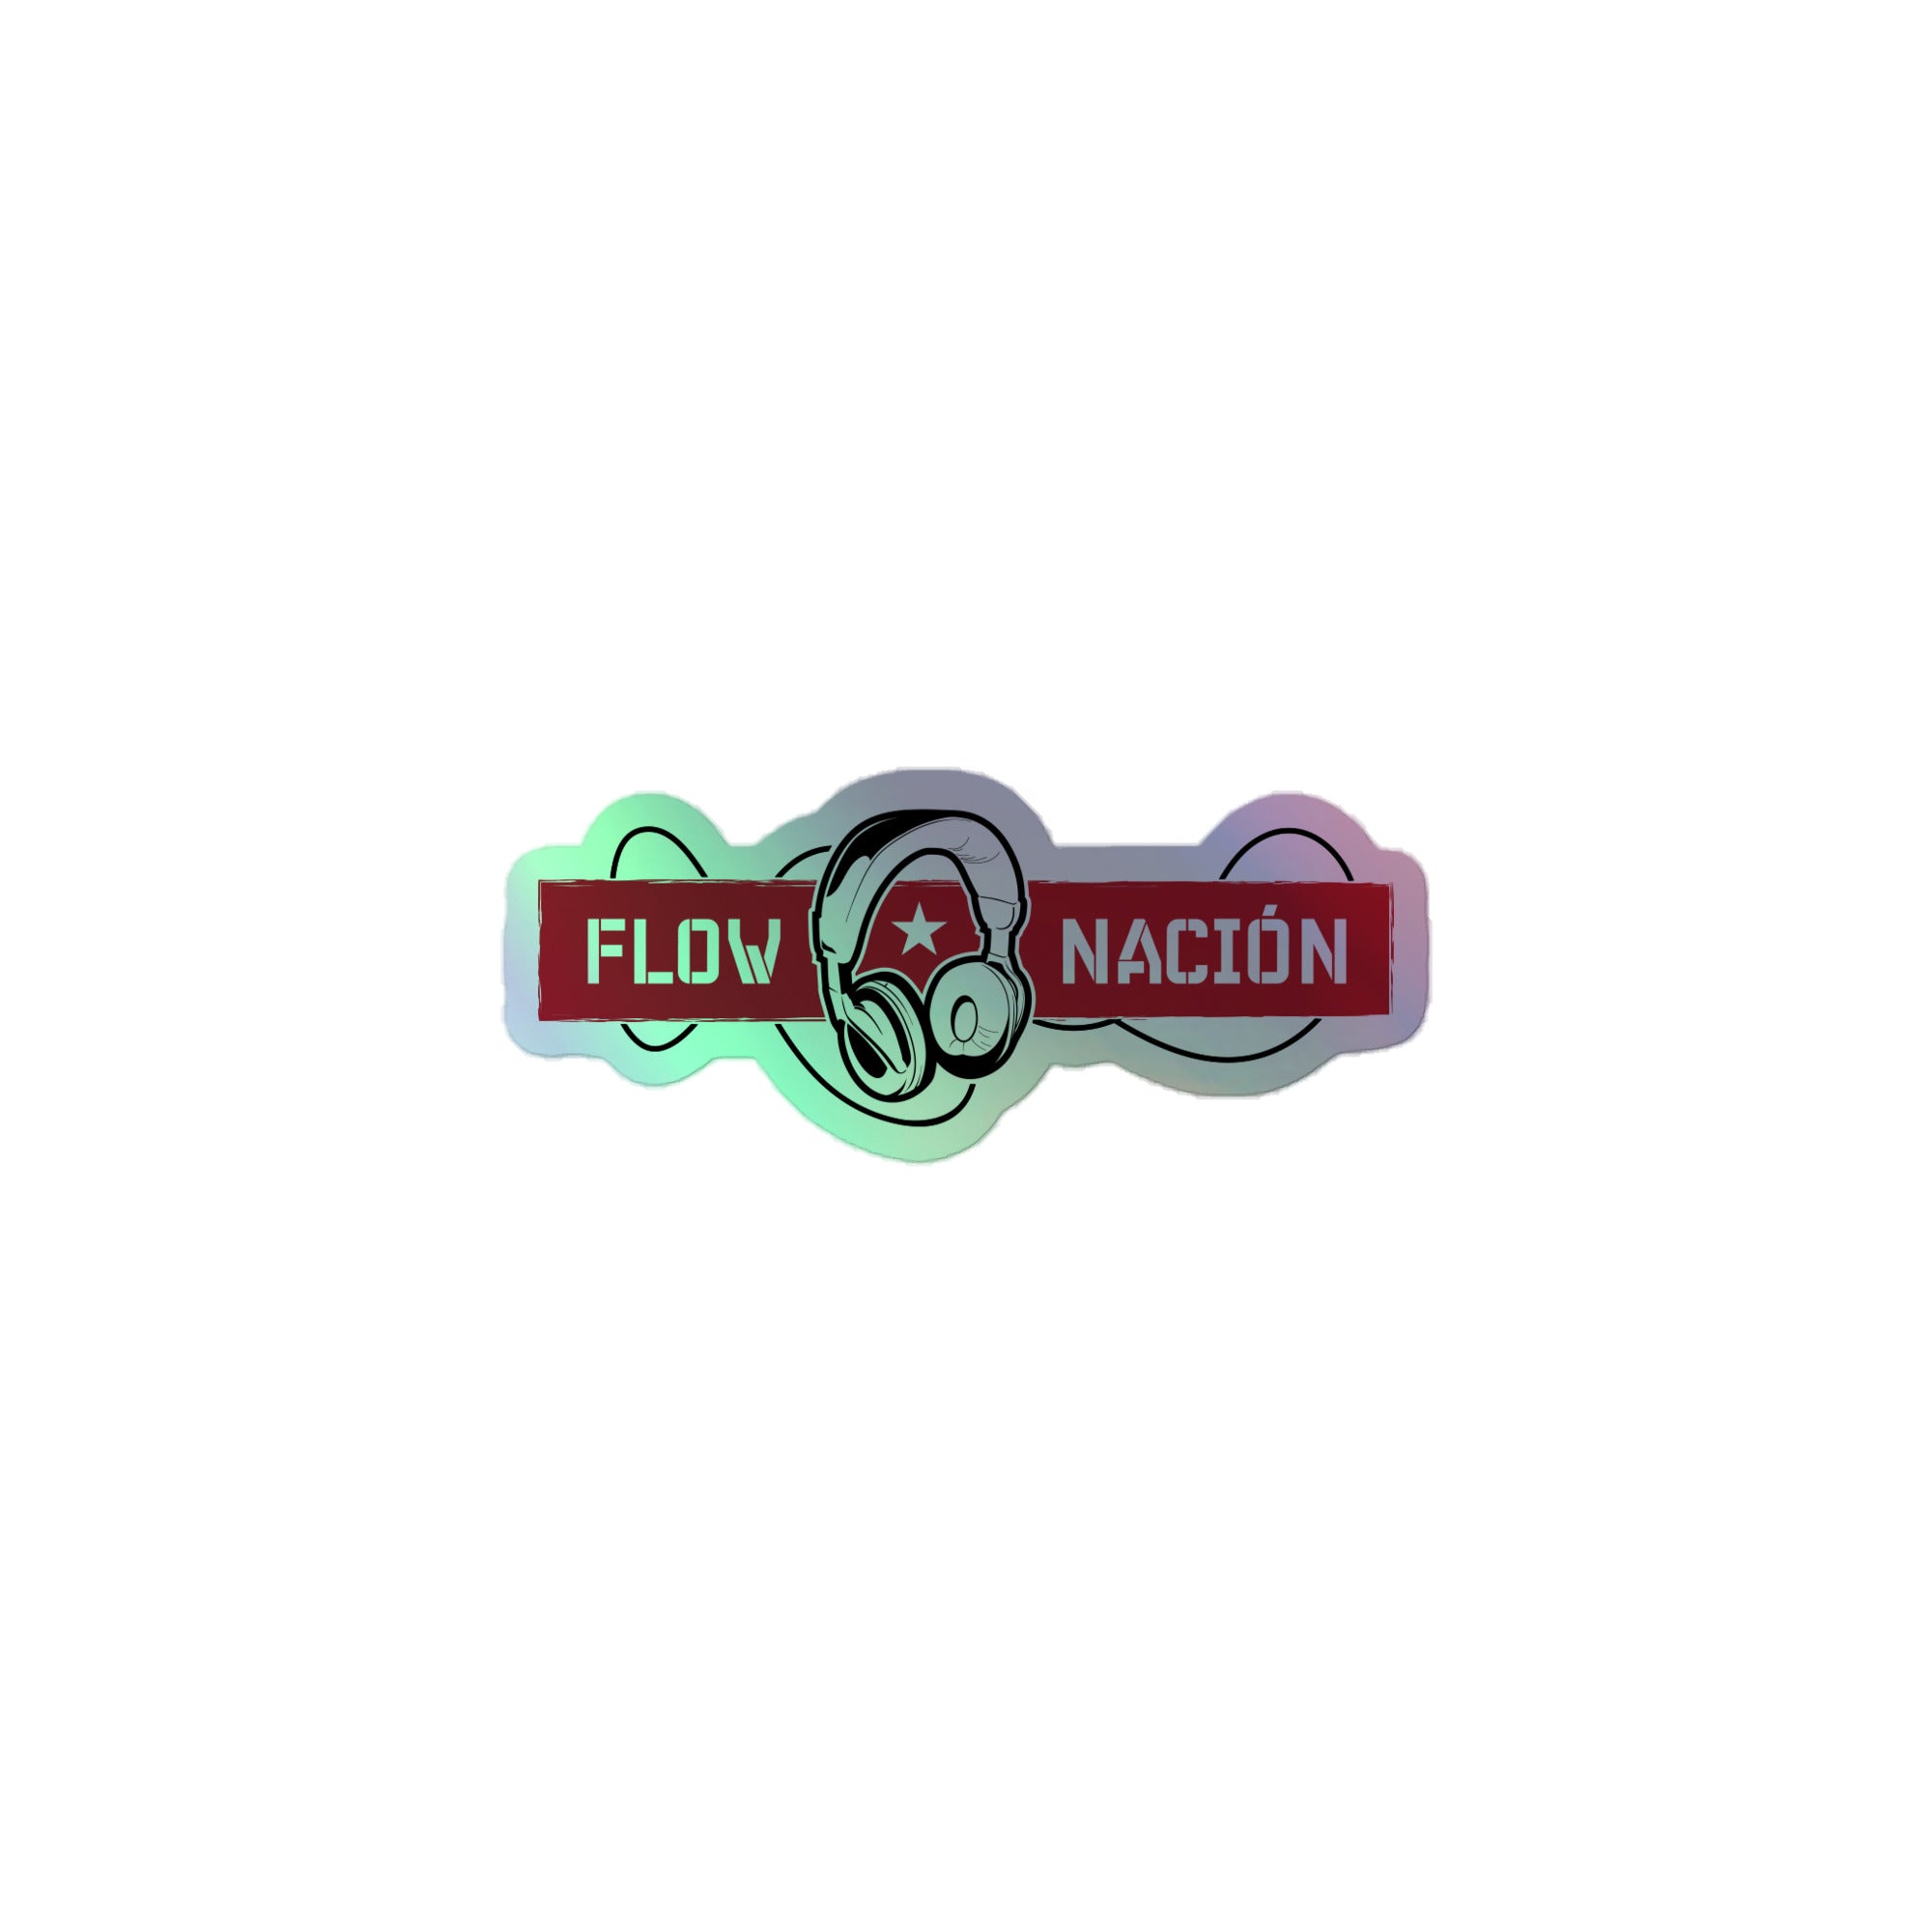 Flow Nacion: Holographic Sticker